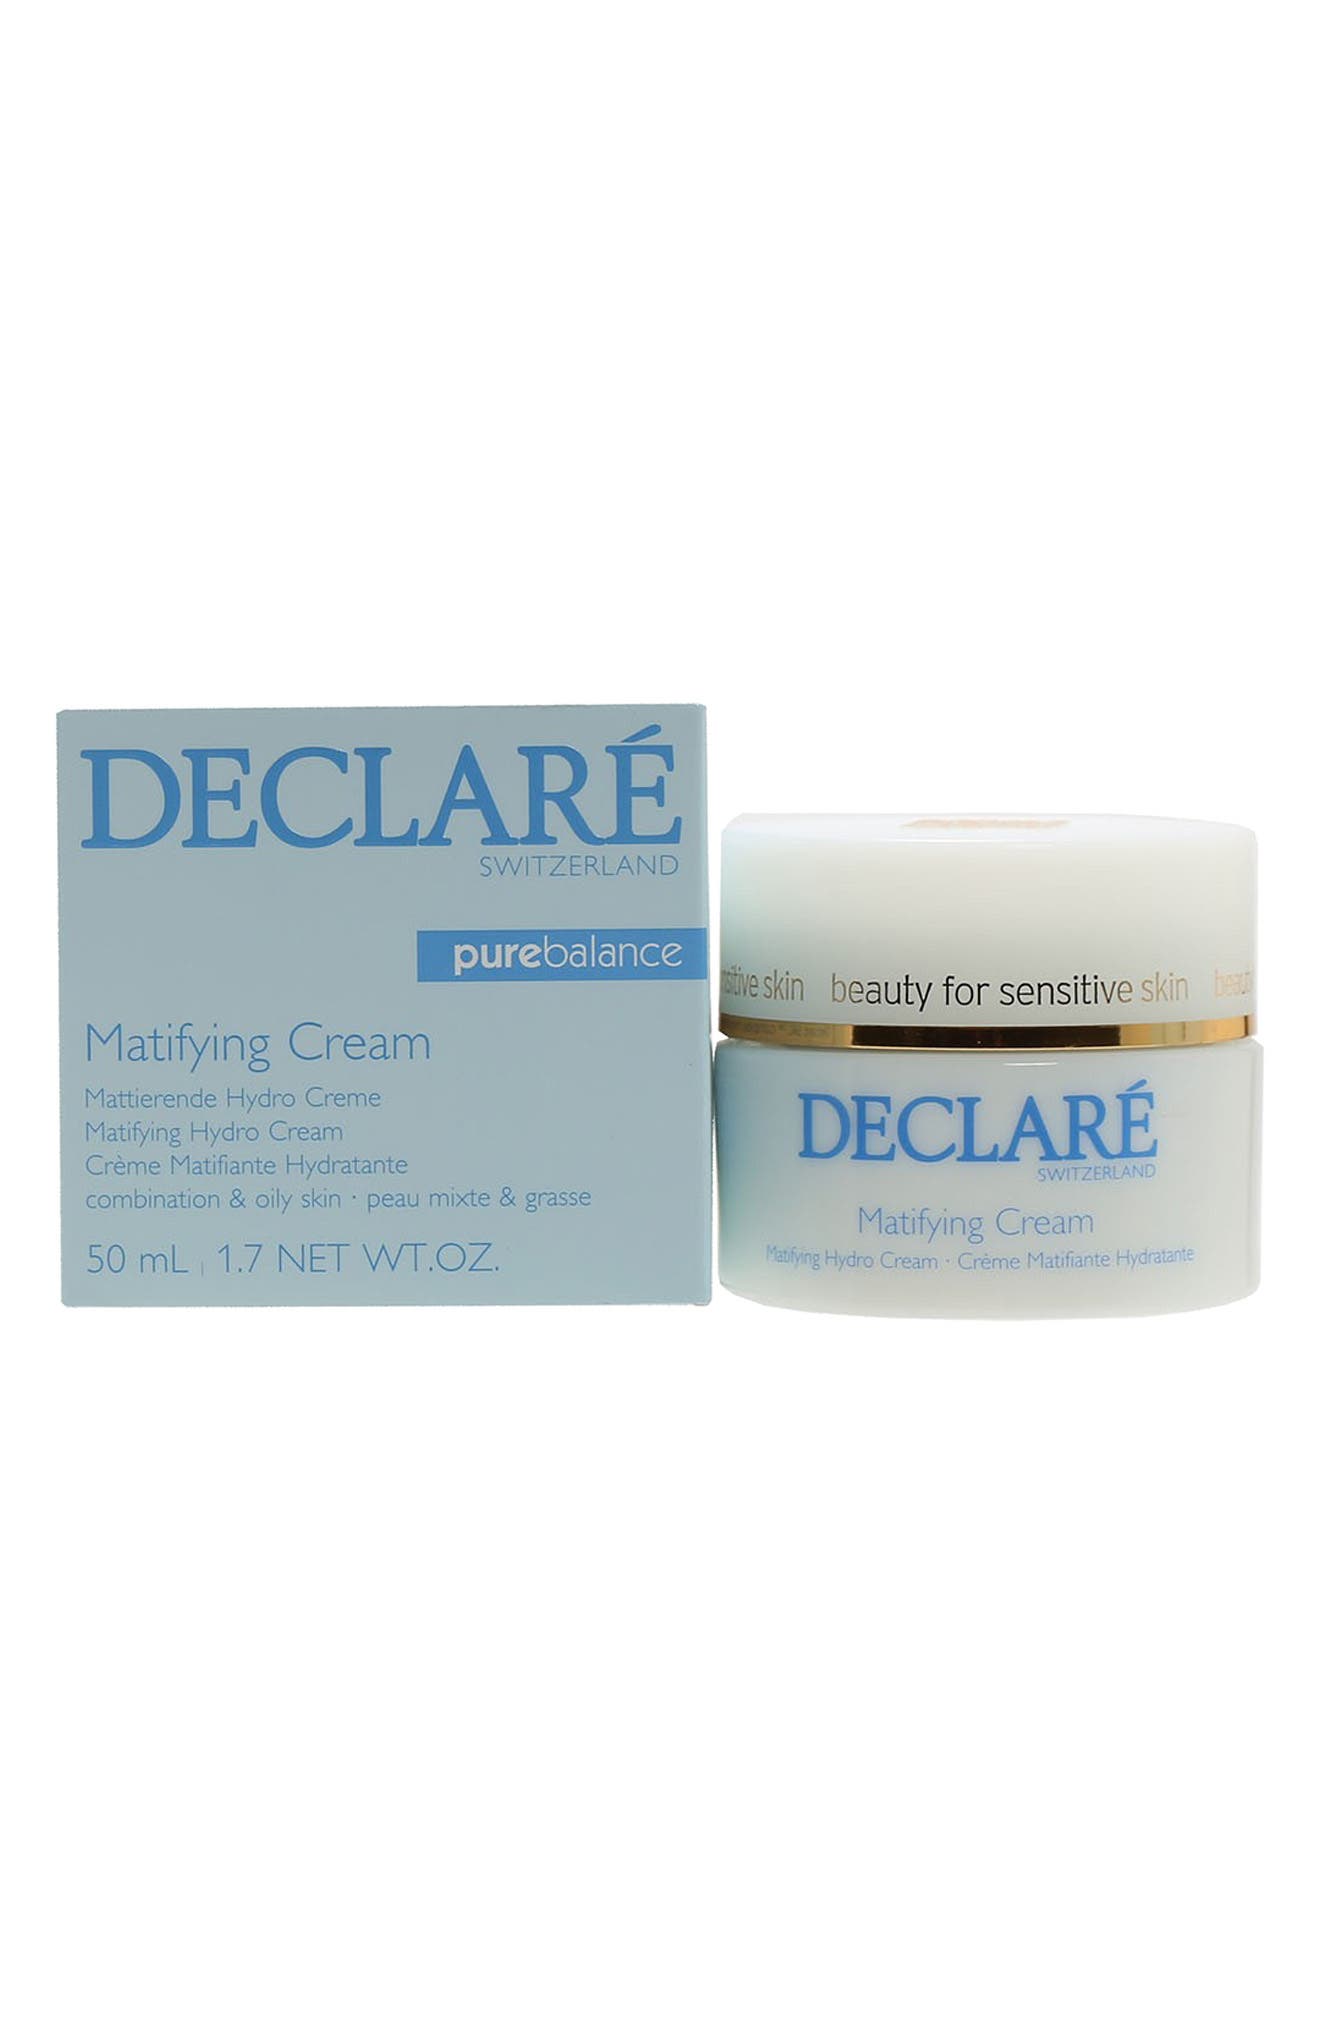 Mattifying Hydro Cream DECLARE